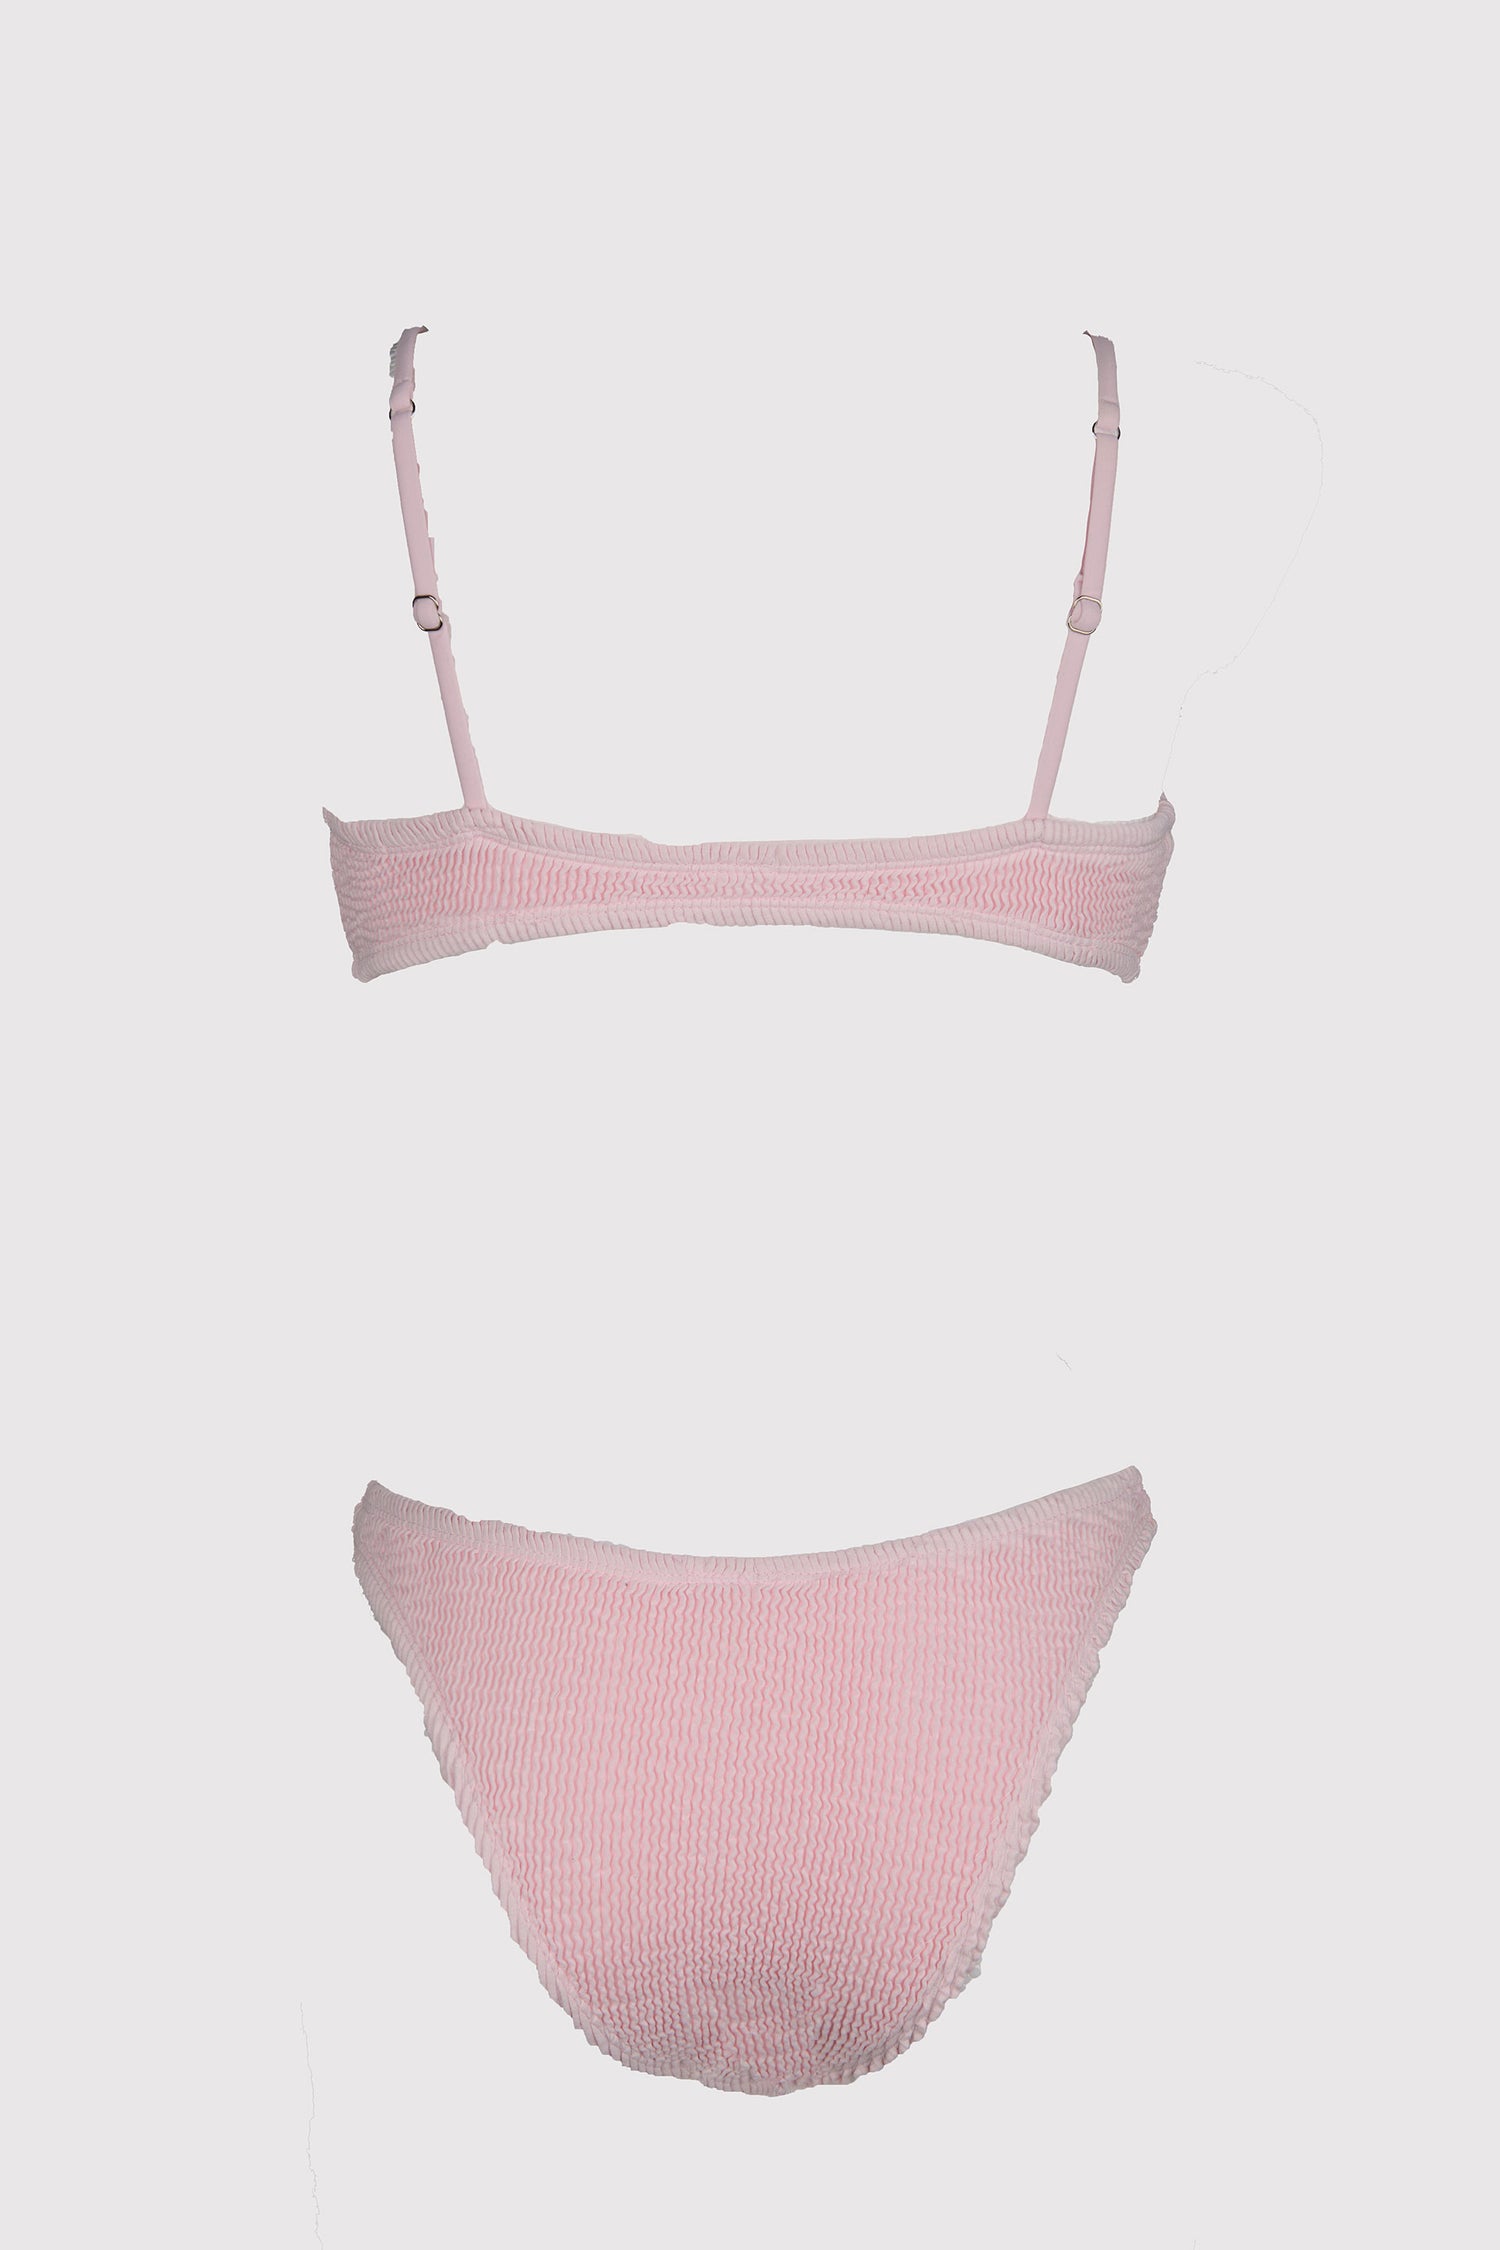 Crinkle Zweiteiliger Rosa Bikini Set